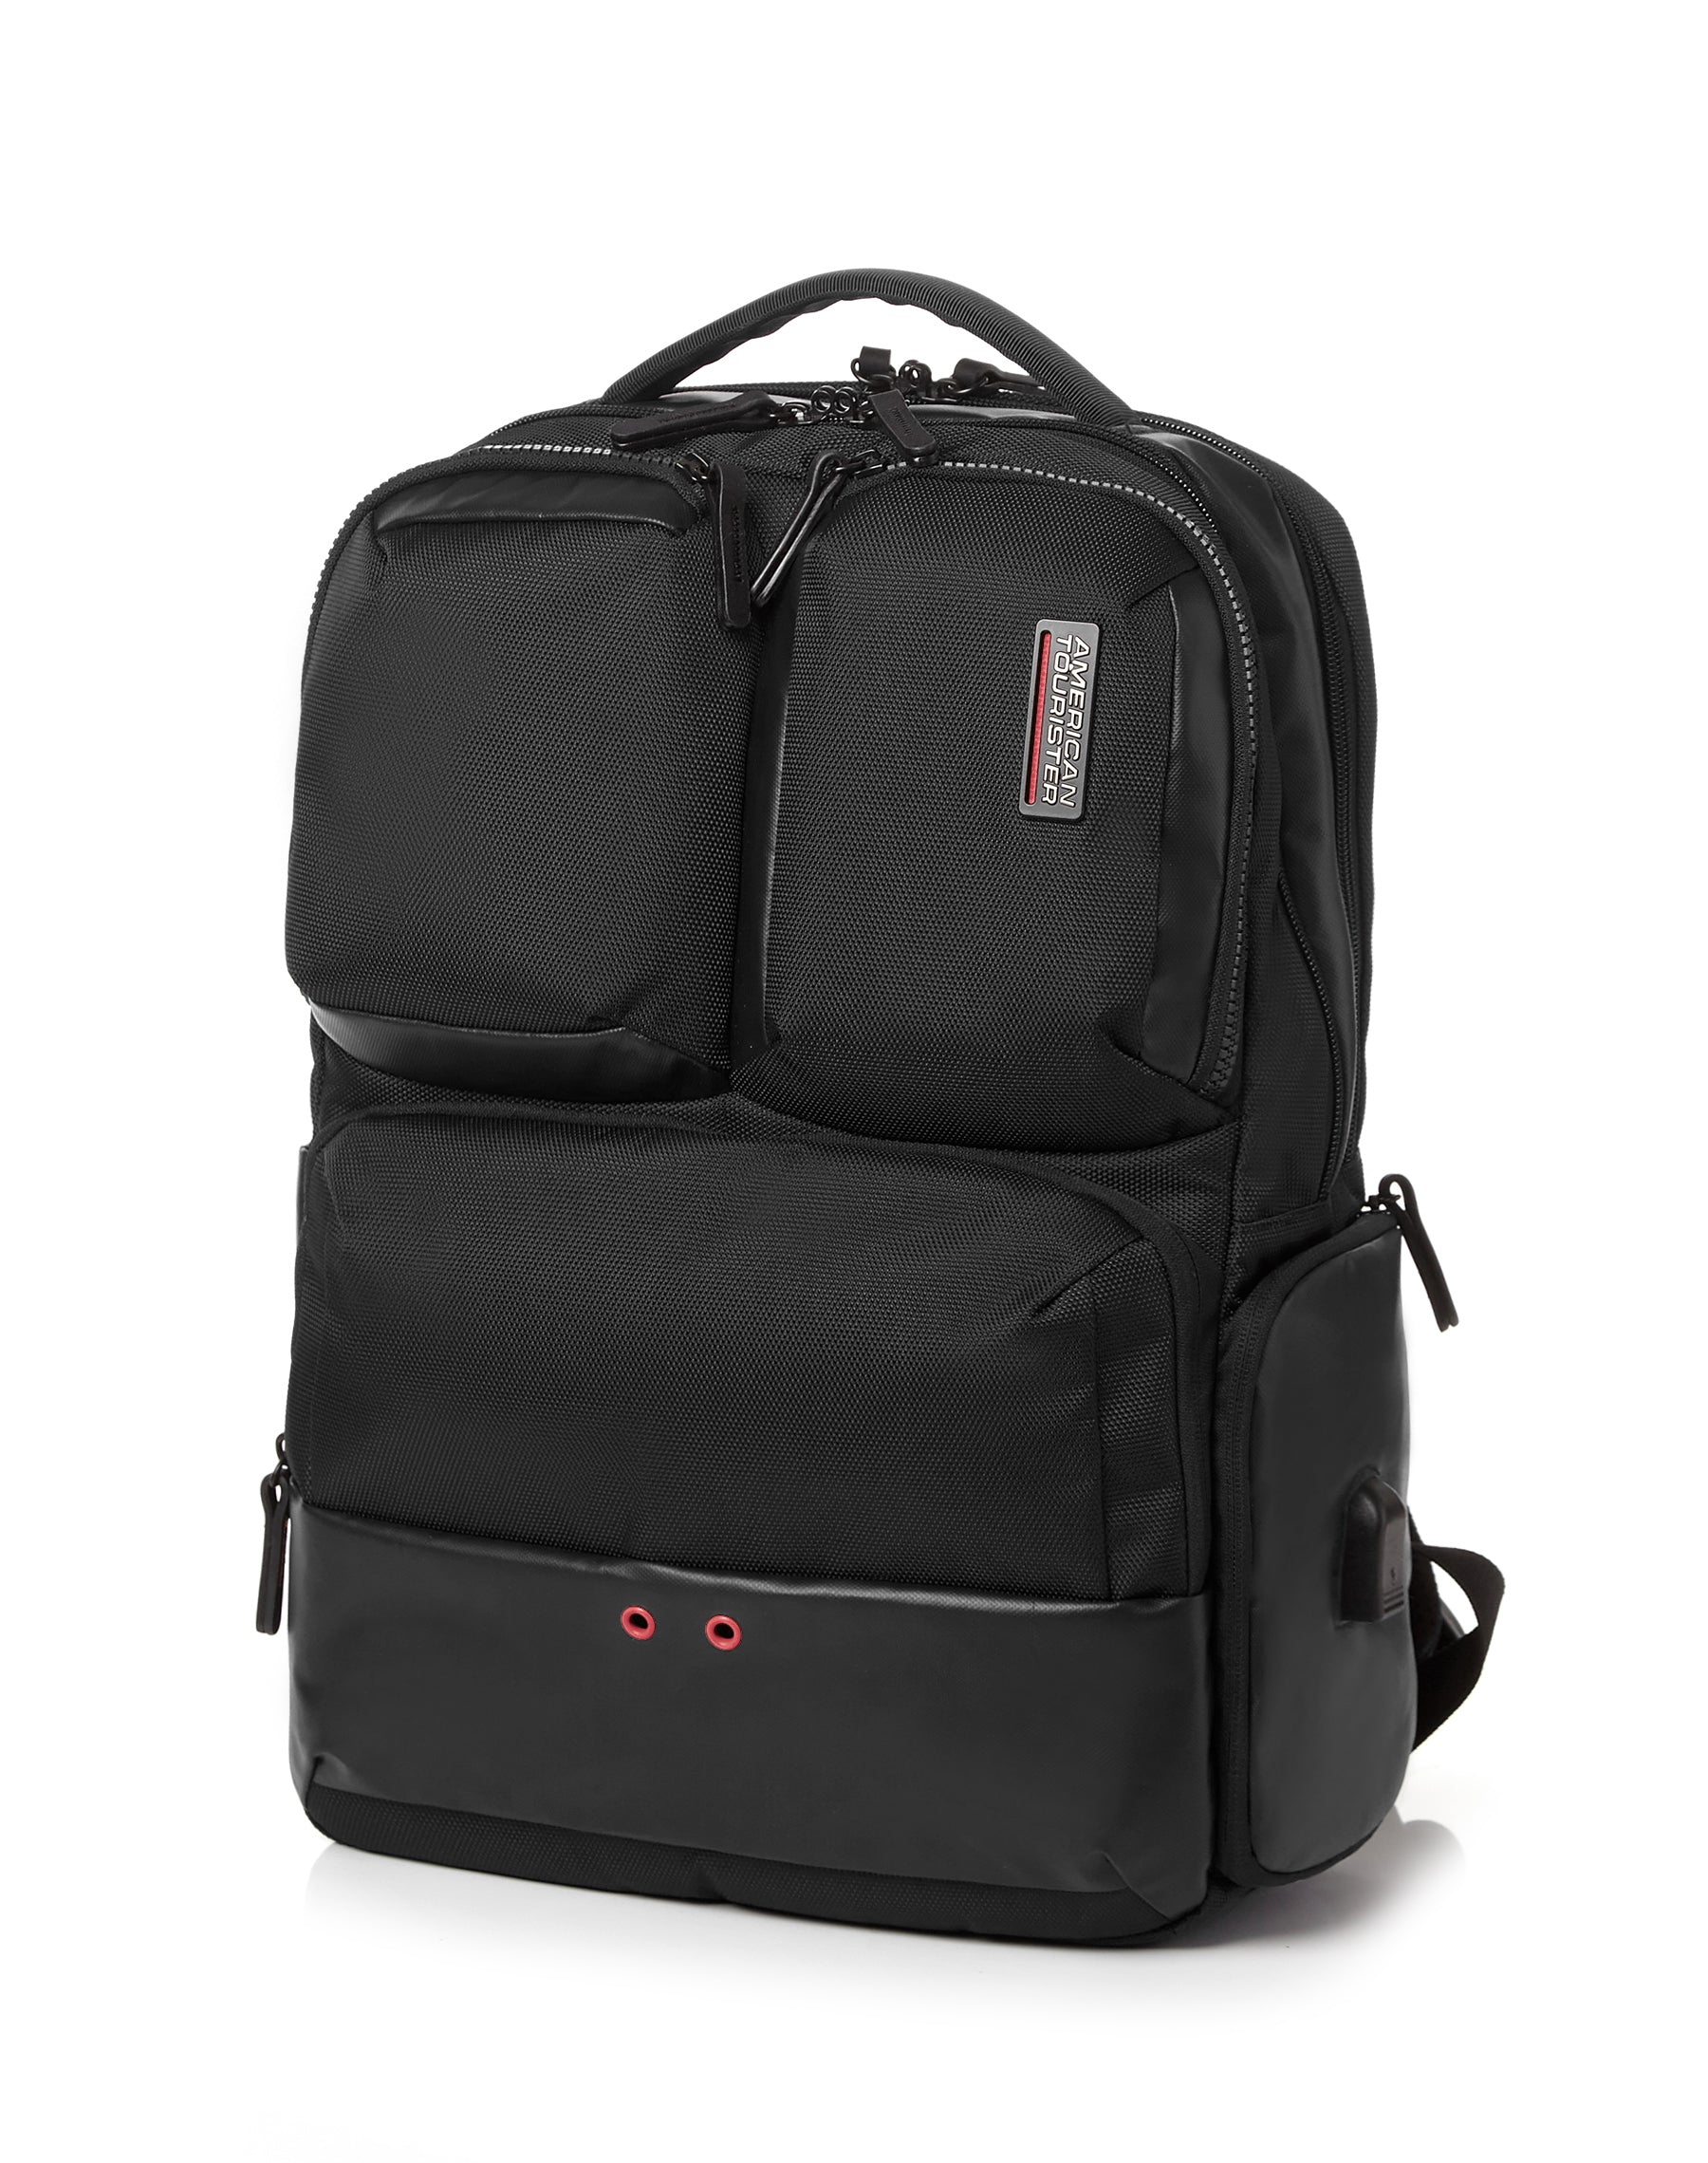 American Tourister - ZORK Backpack 2 AS - Black-1